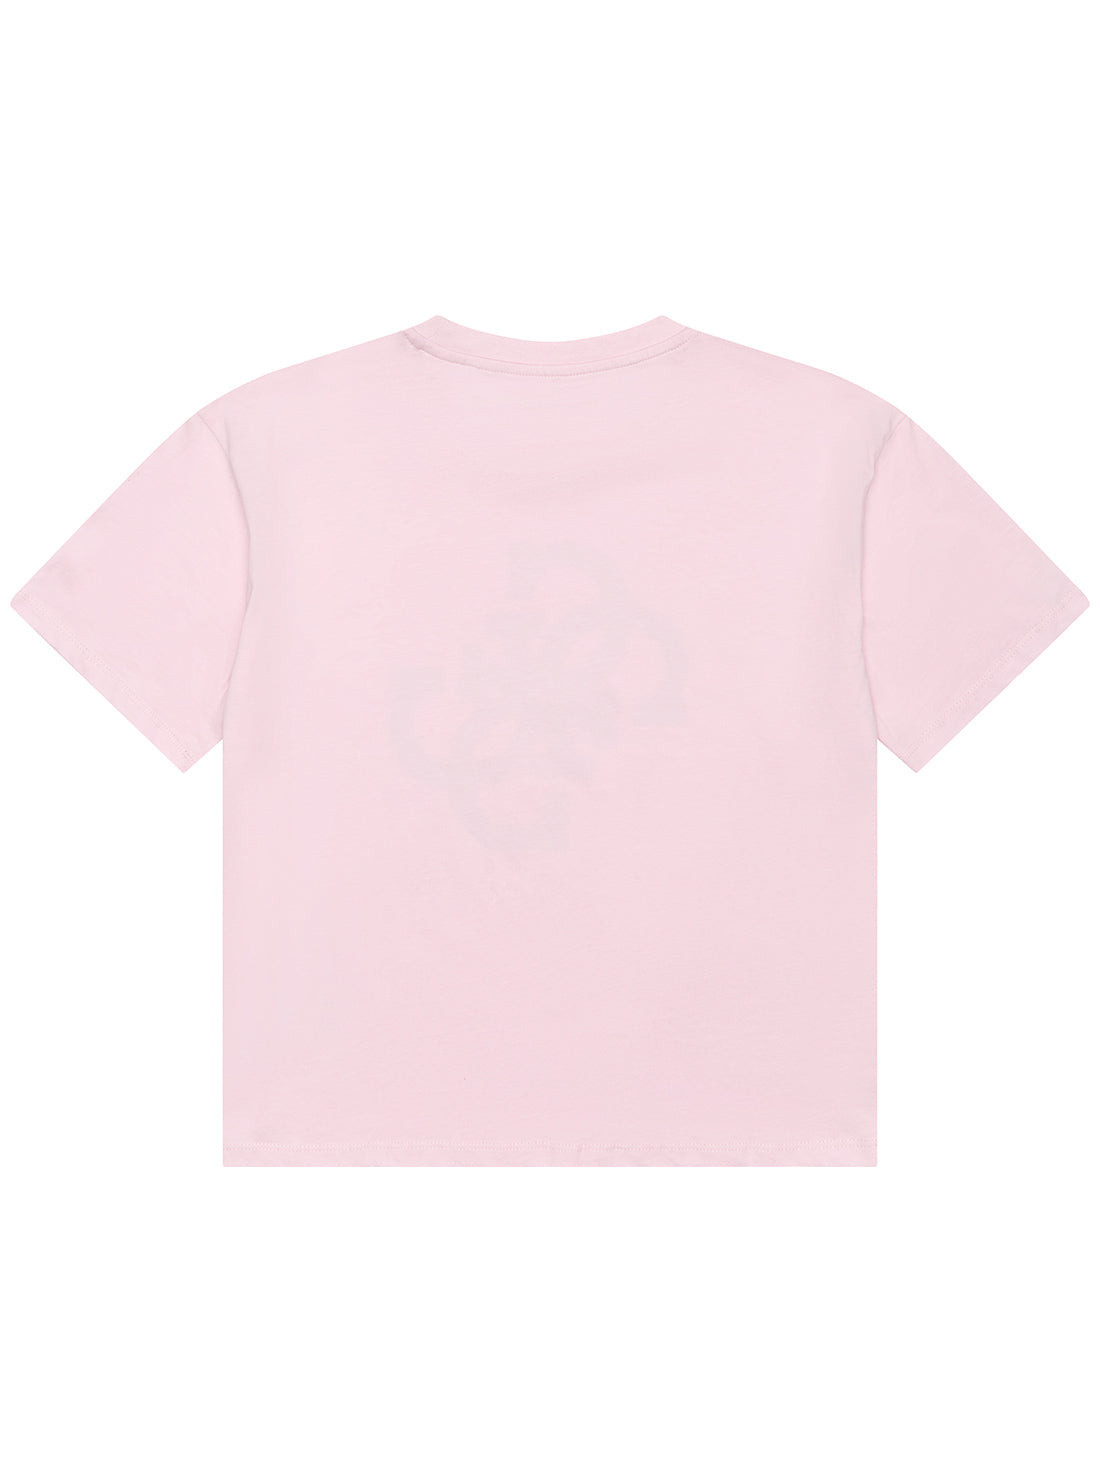 GUESS Pink Short Sleeve T-Shirt (7-16) back view